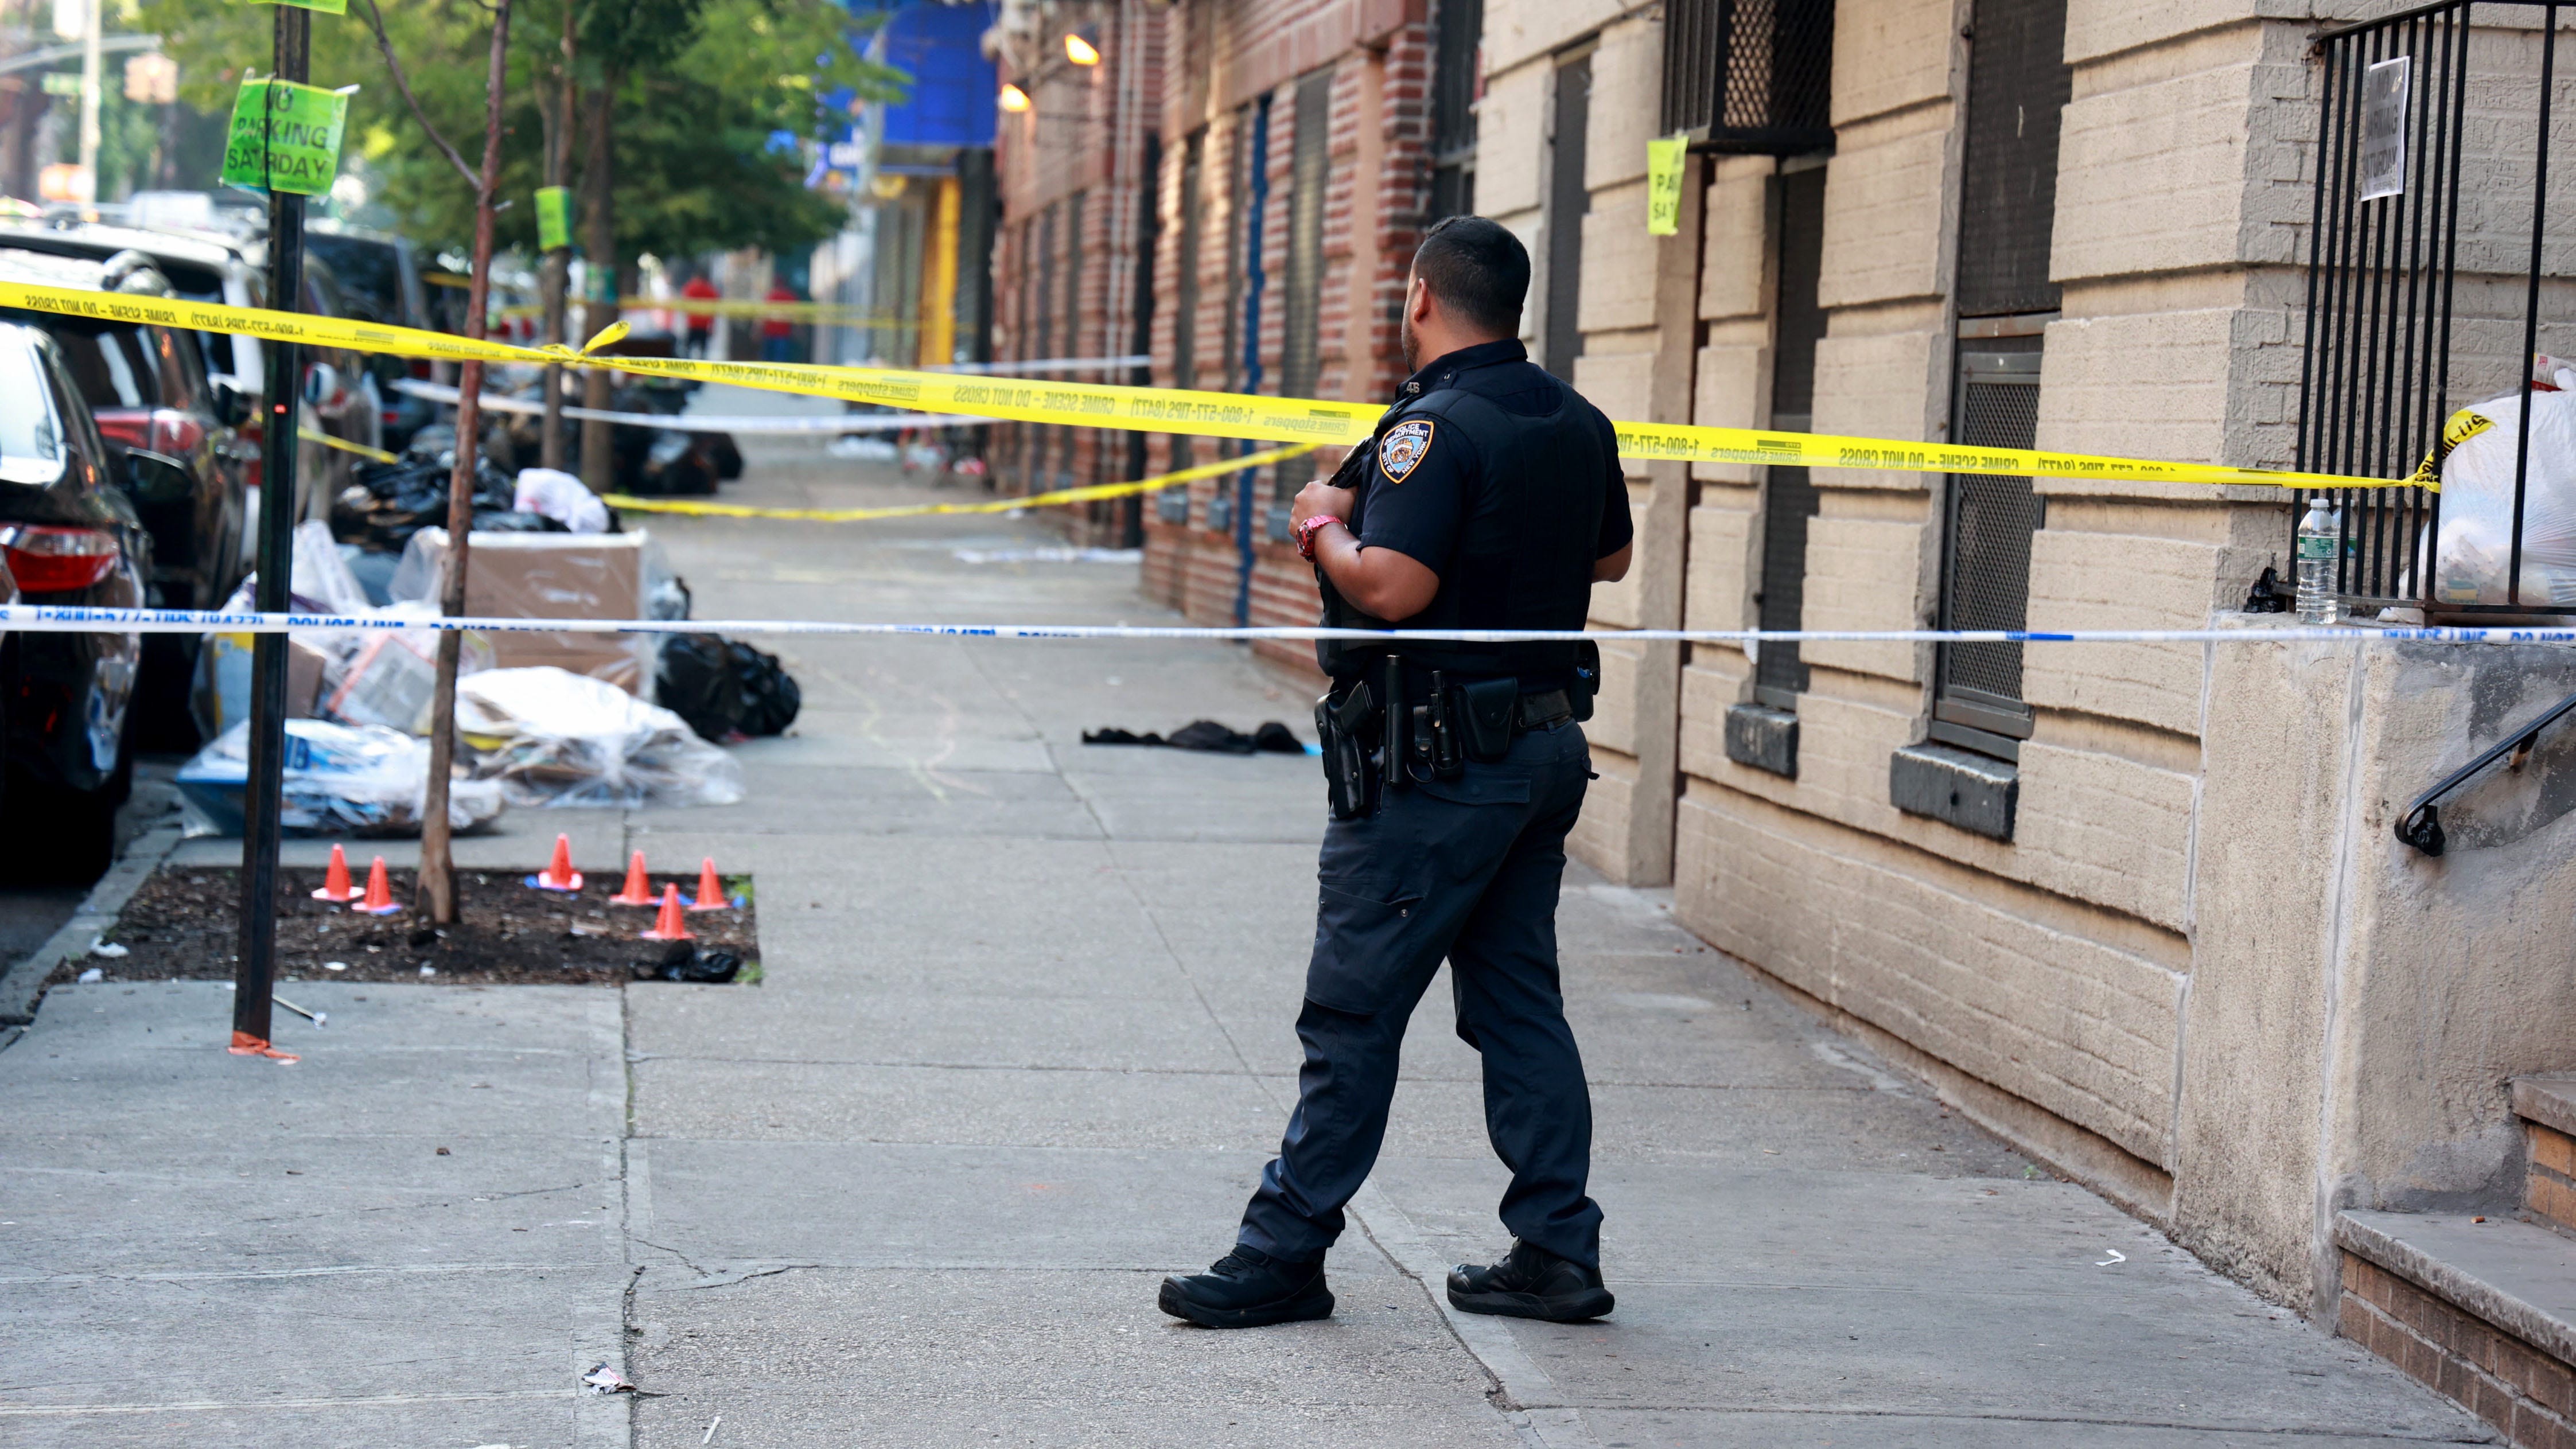 Bronx NYC shooting investigation